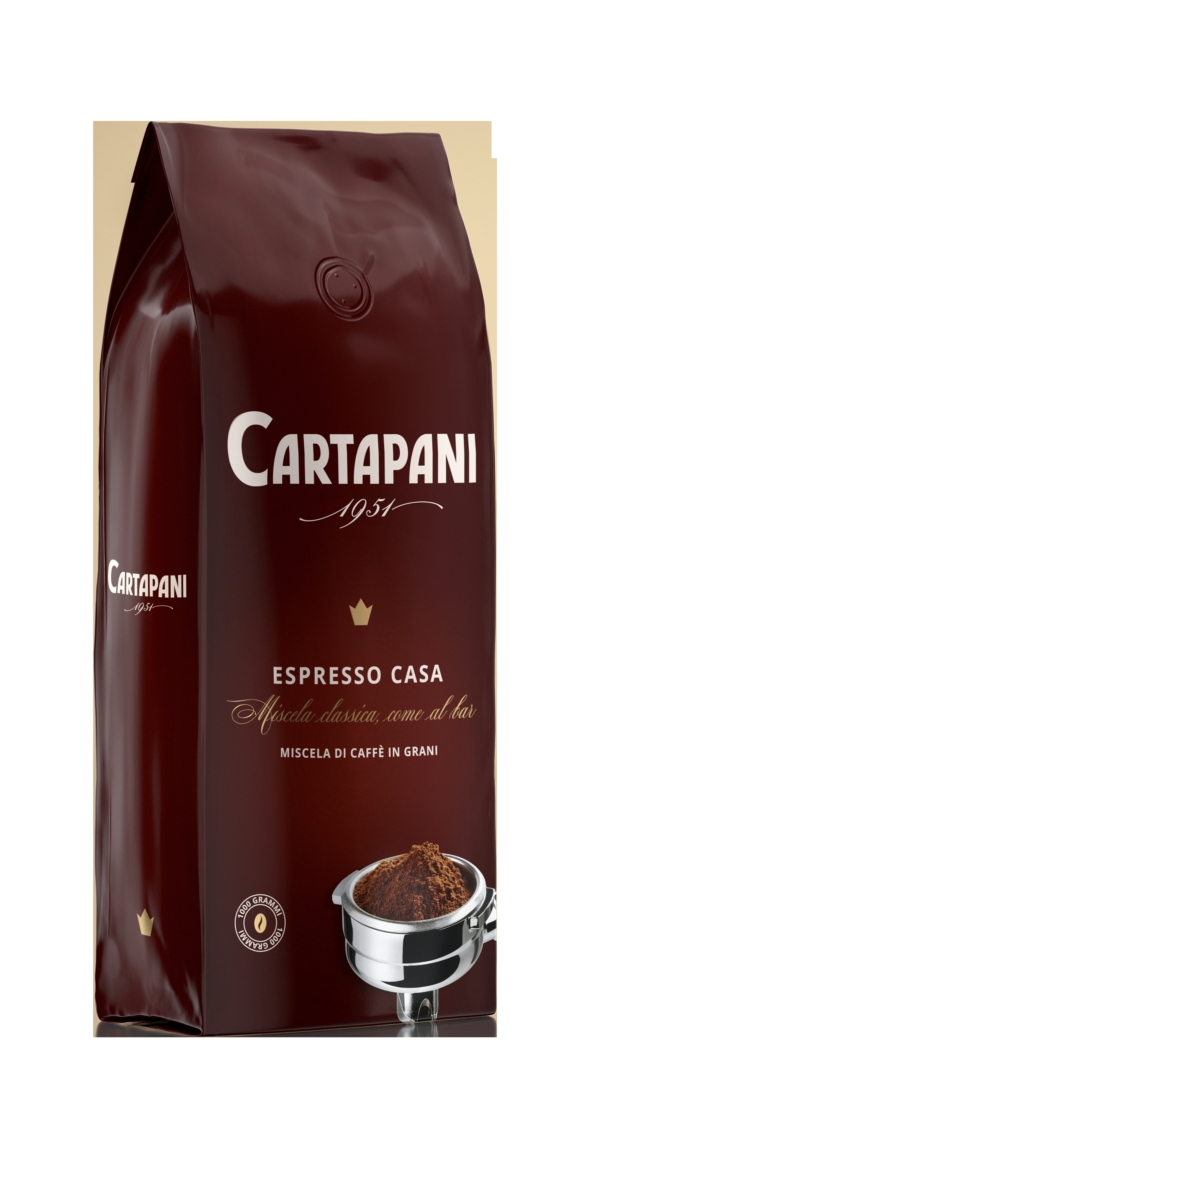 Caffè Cartapani - Espresso Casa - 1000g Beutel - Bohnen